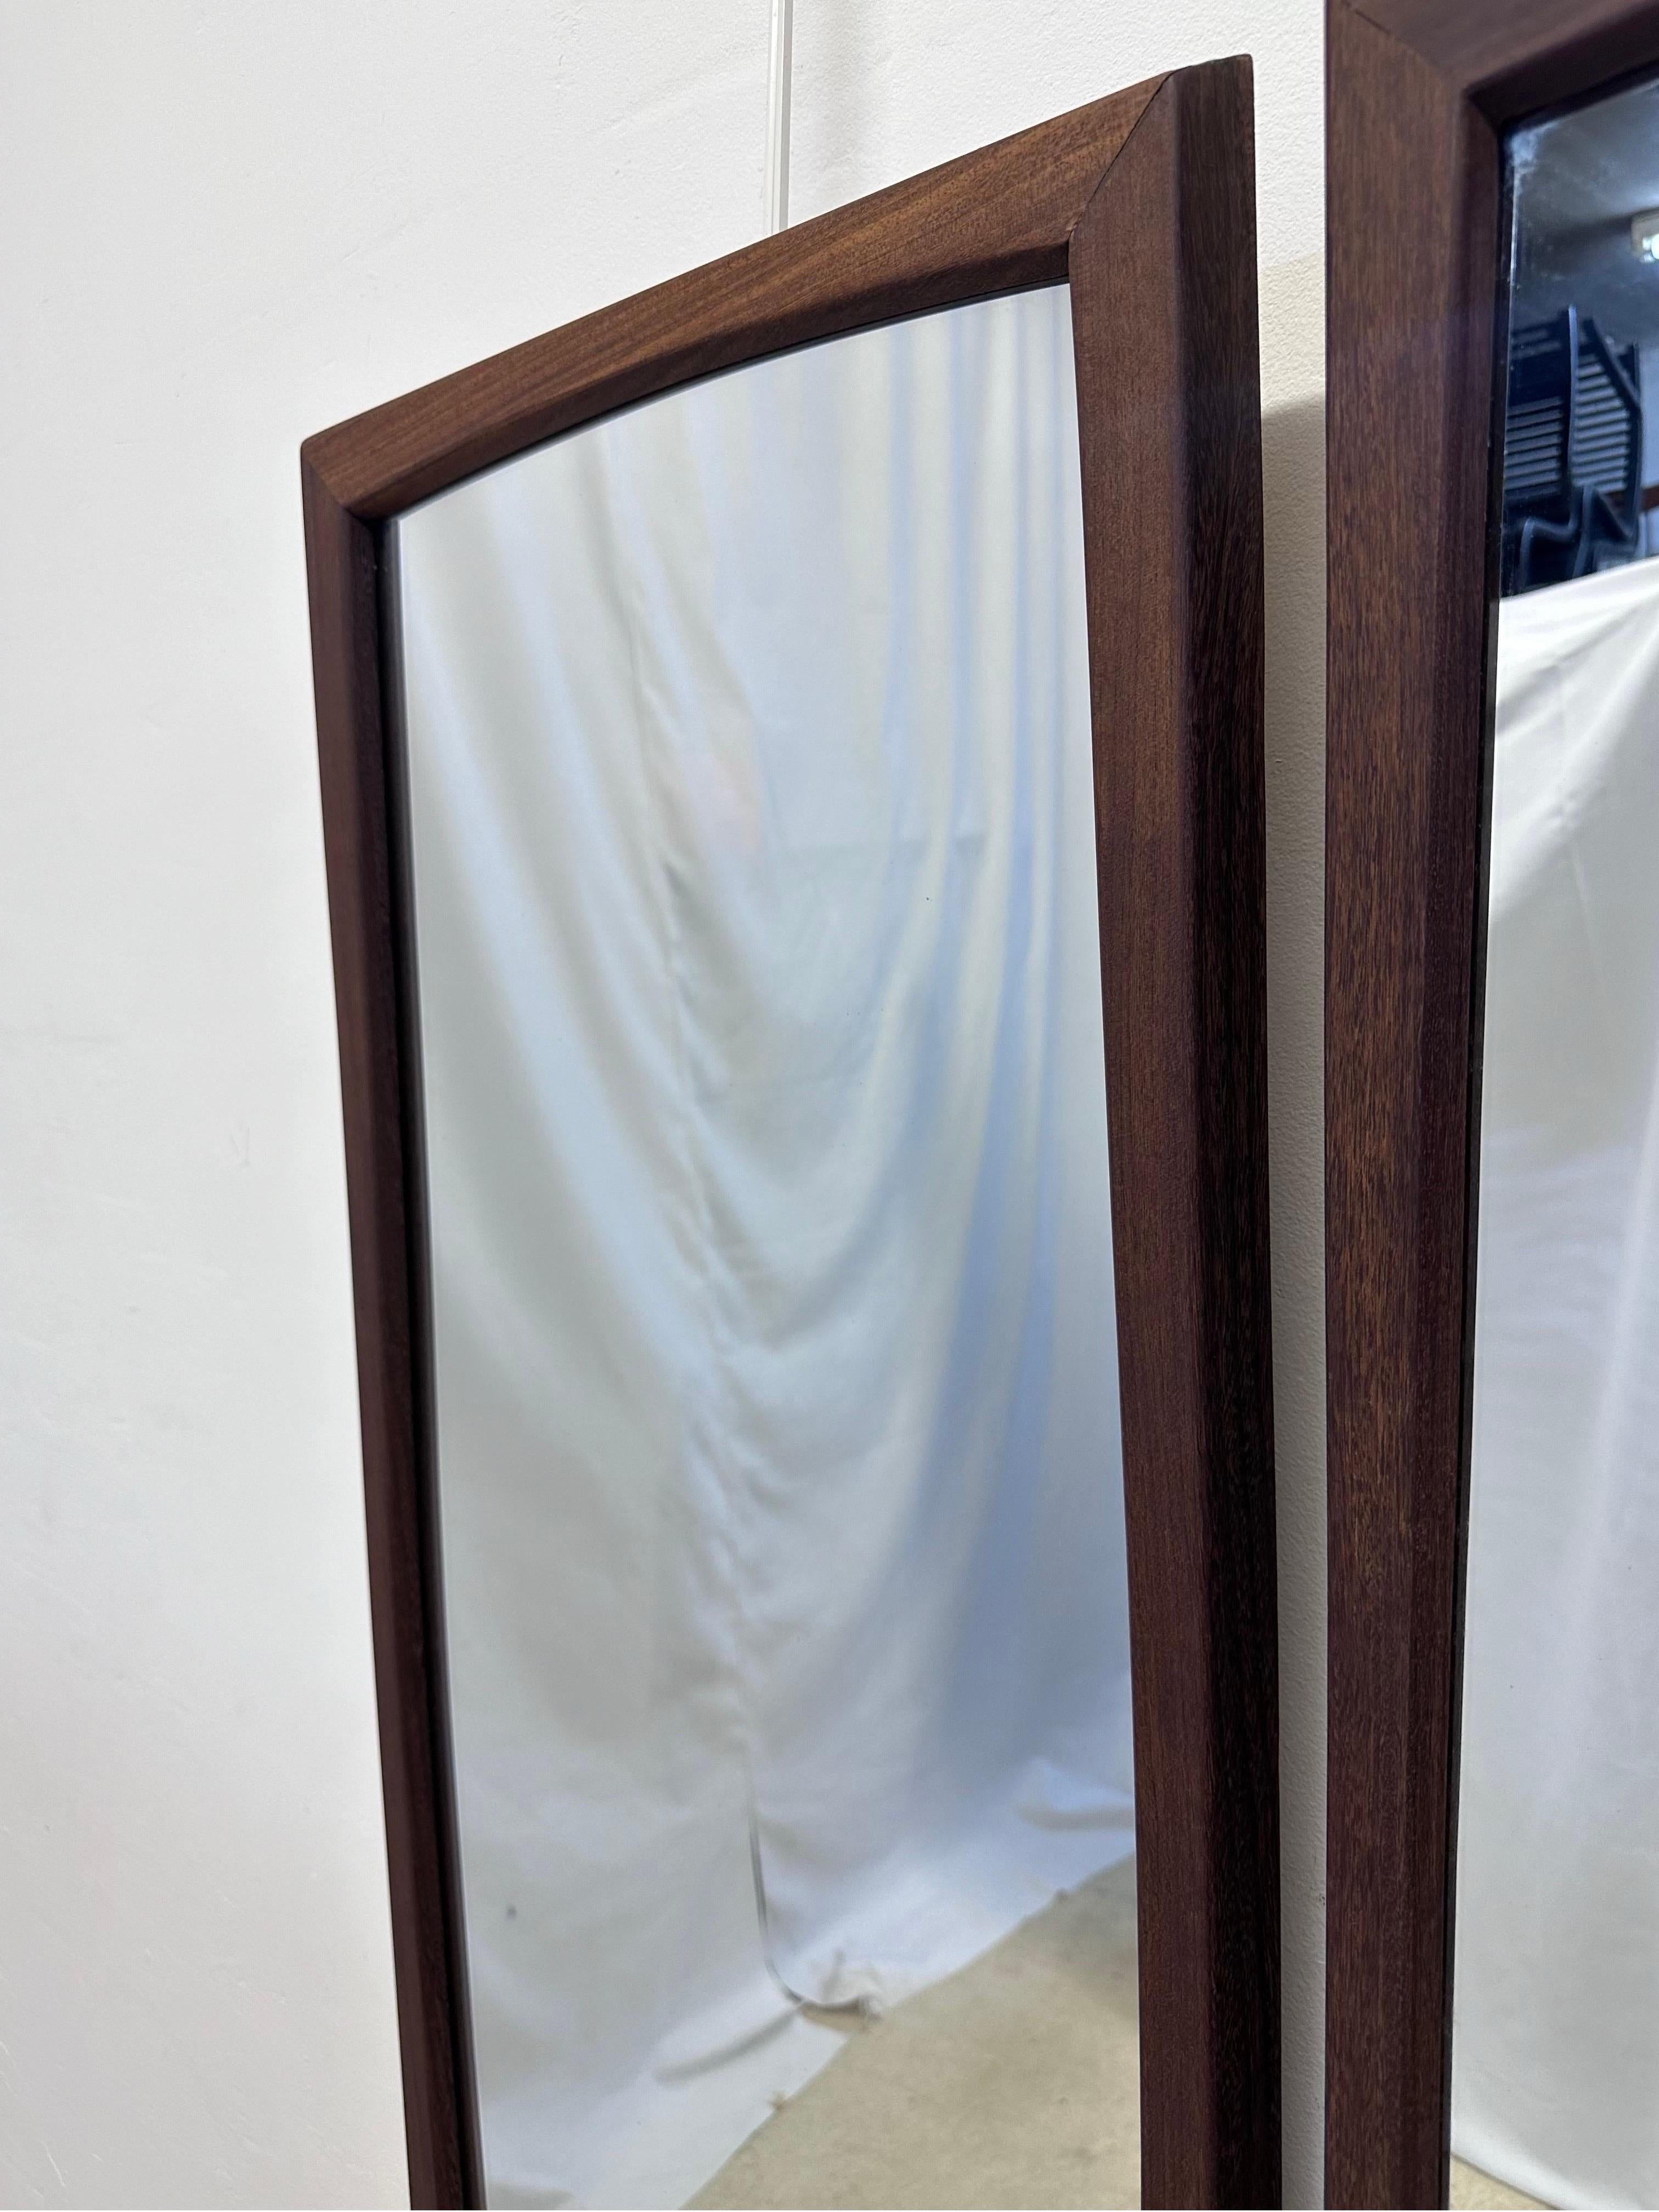 20th Century Mid-Century Danish Modern Teak Mirrors - a Pair For Sale